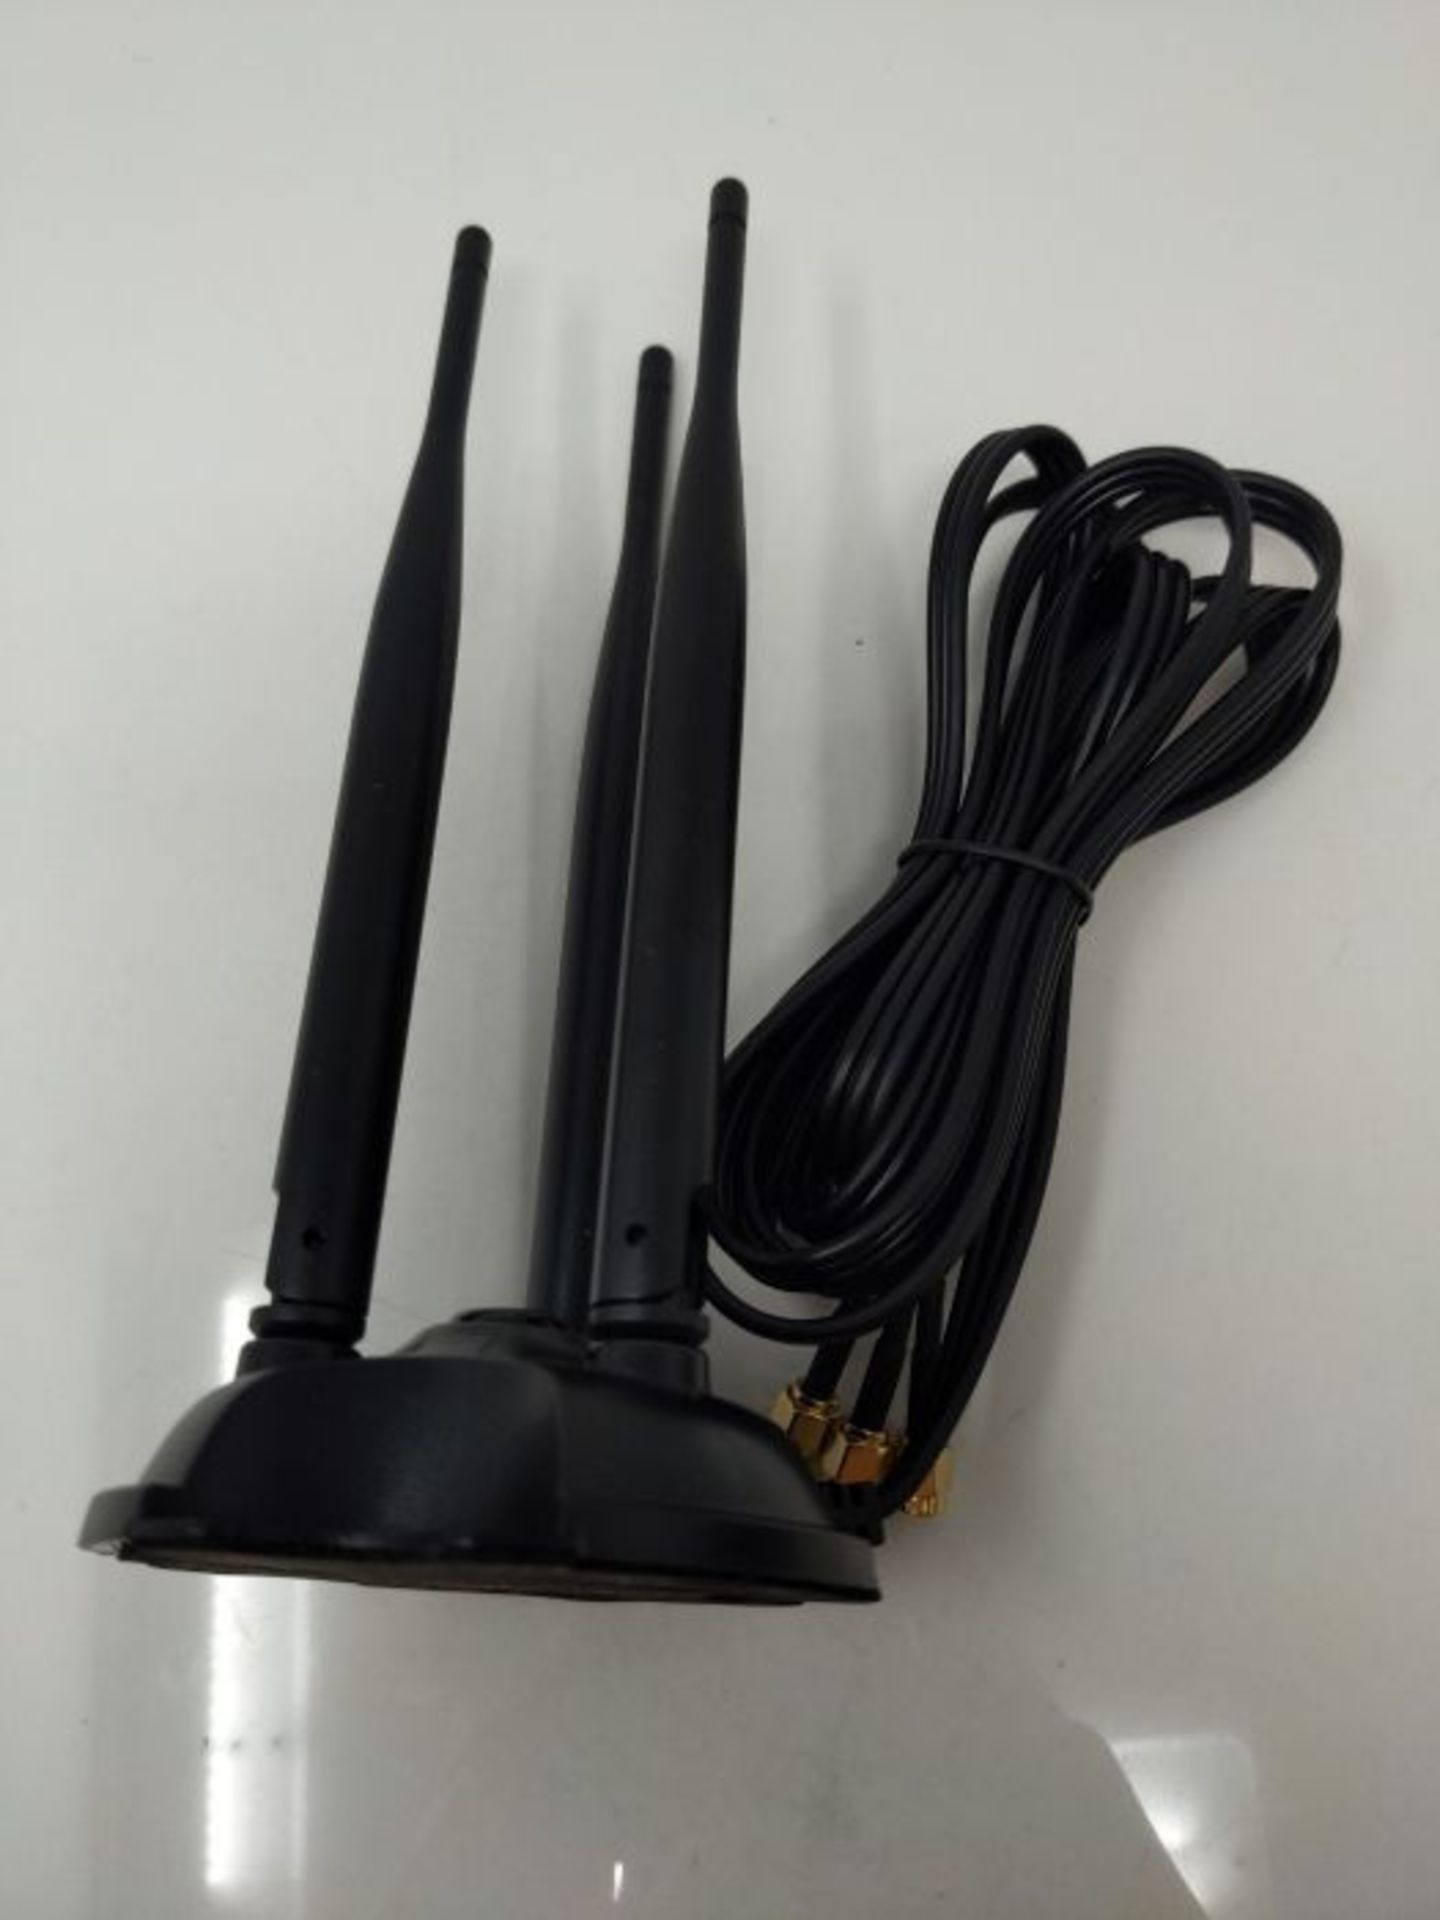 Bingfu Wifi Antenna Dual Band WLAN 2.4 GHz 5 GHz 5.8 GHz Aerial Magnetic Base 6dBi RP-